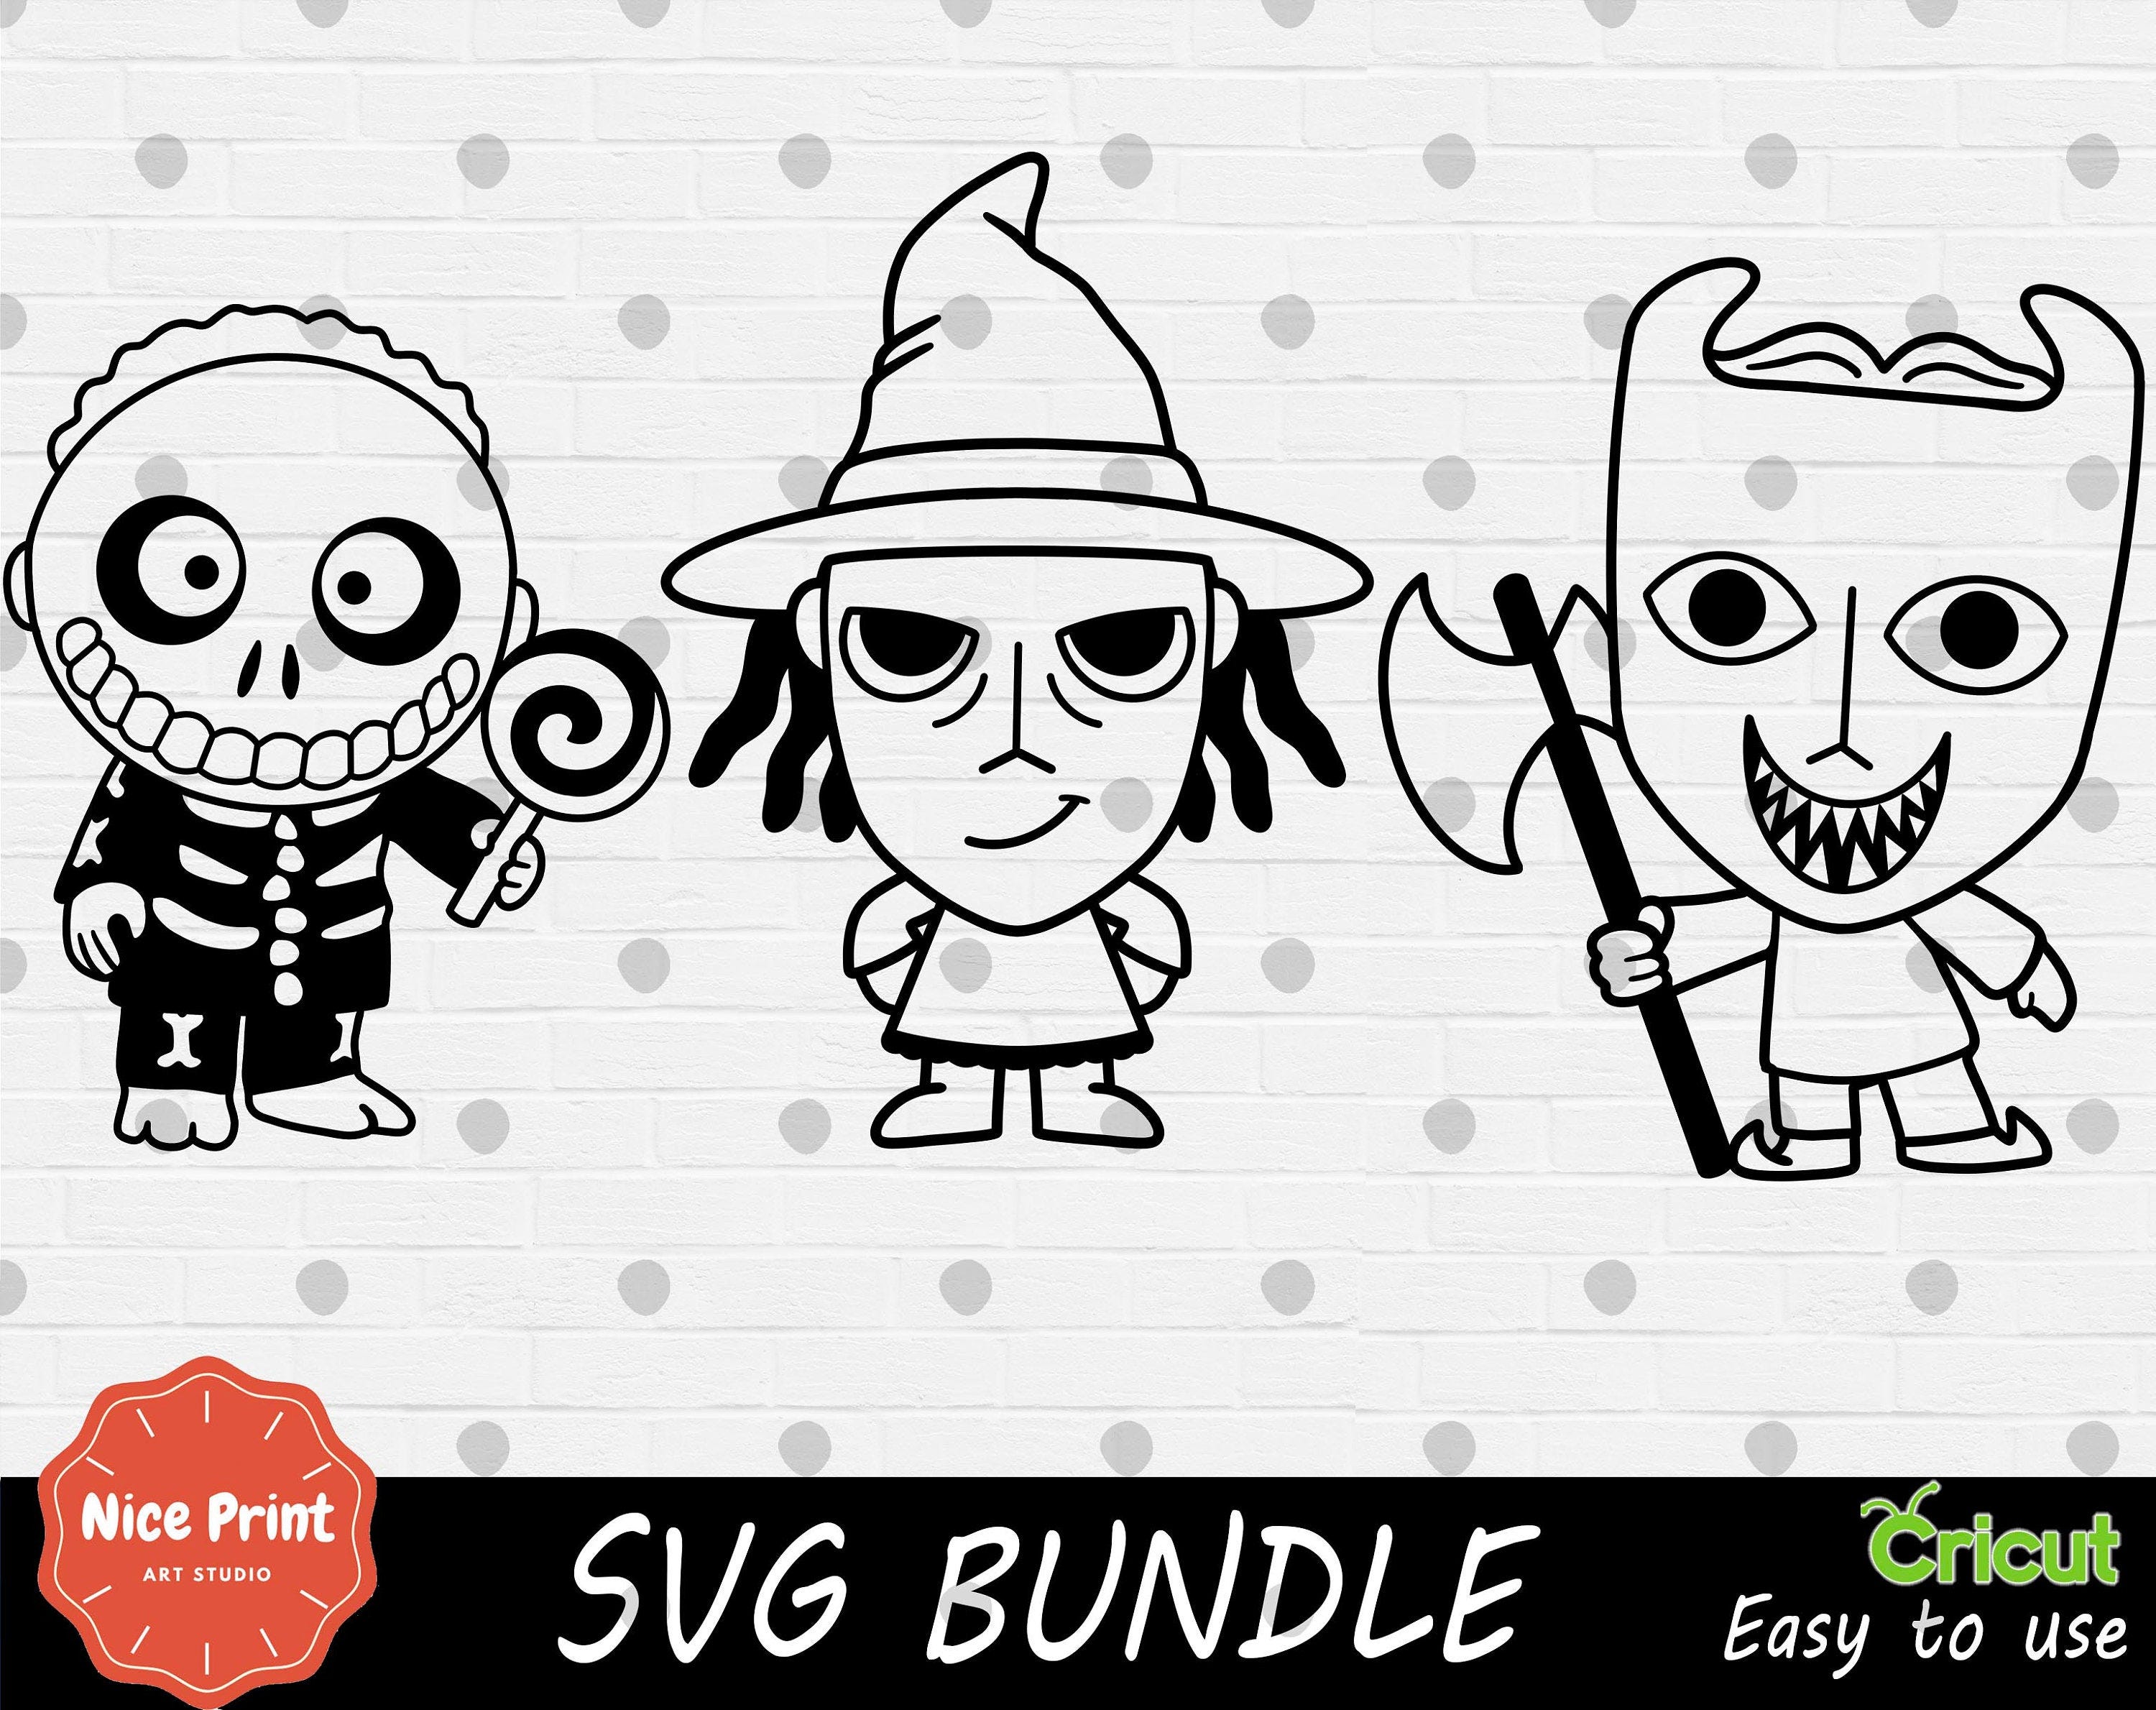 Outline Nightmare before Christmas SVG Bundle - Cricut SVG - SVG Cut File - Digital Print - Easy Cut - High Quality - Christmas svg